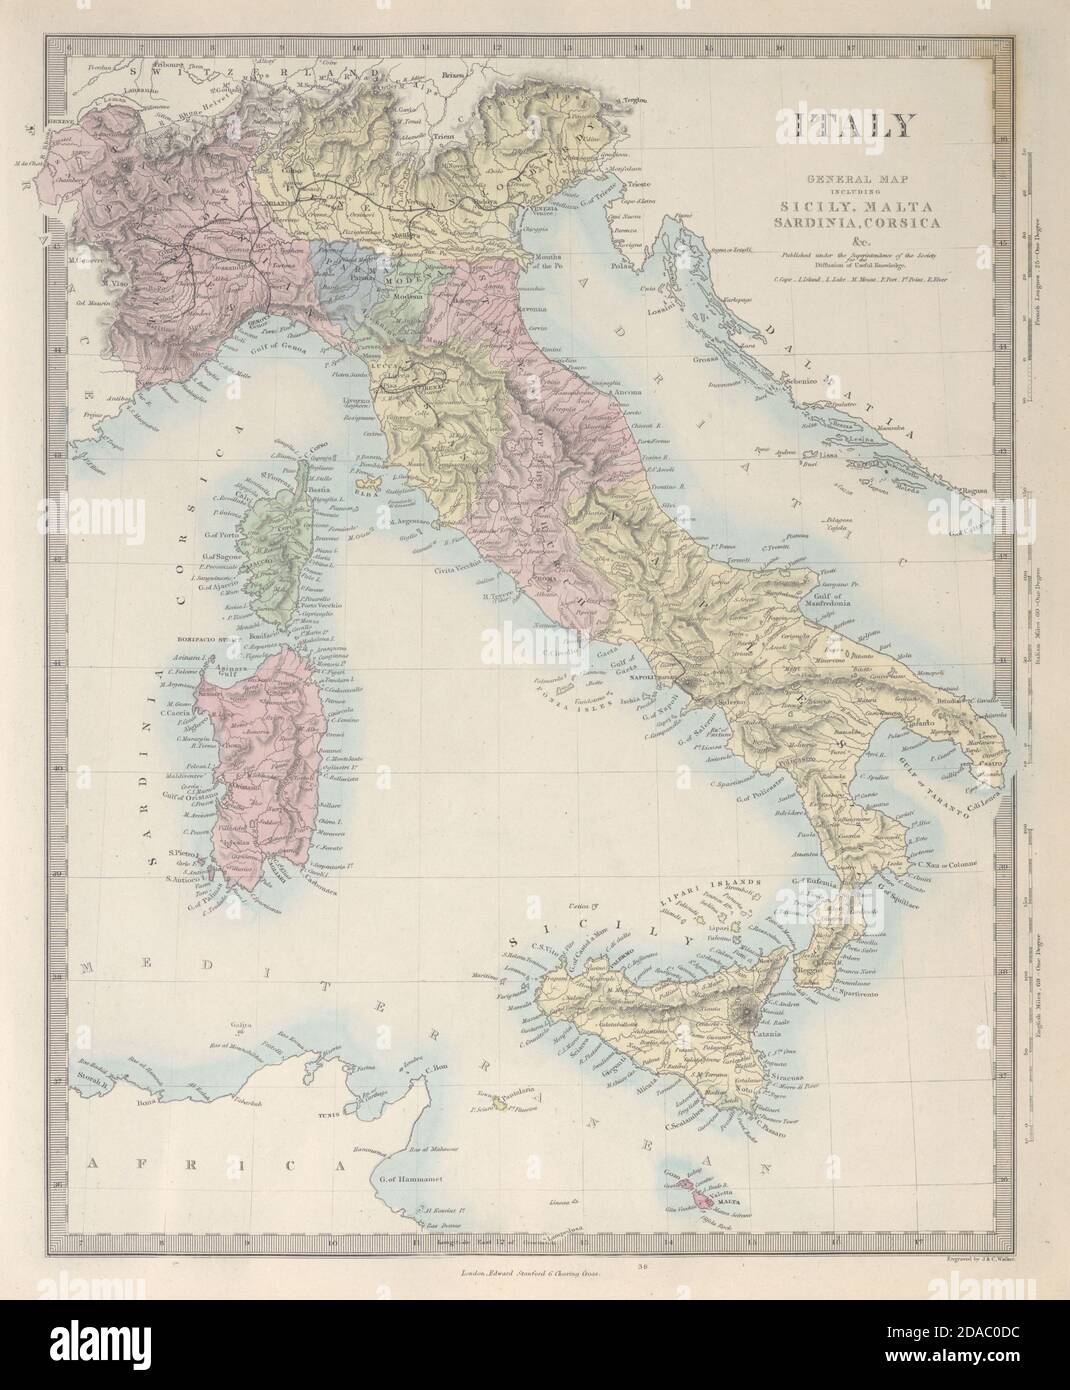 ITALY general map. Sicily Sardinia Corsica. Includes Savoie & Nice. SDUK 1857 Stock Photo